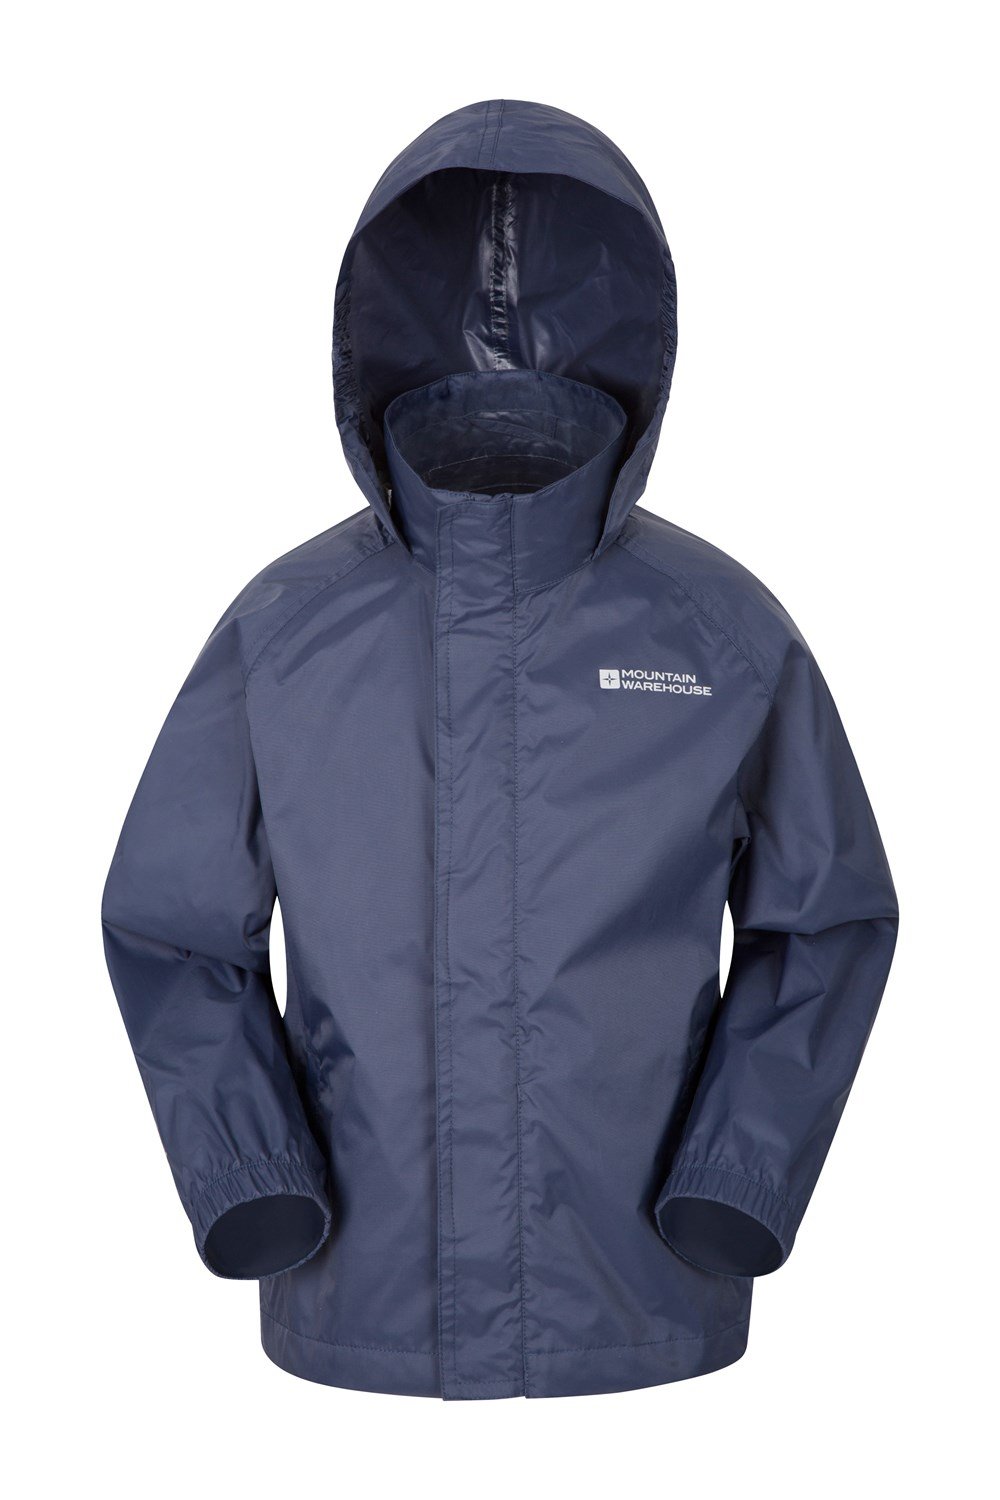 MOUNTAIN WAREHOUSE KIDS Rain Jacket Waterproof Packable Packaway Coat ...